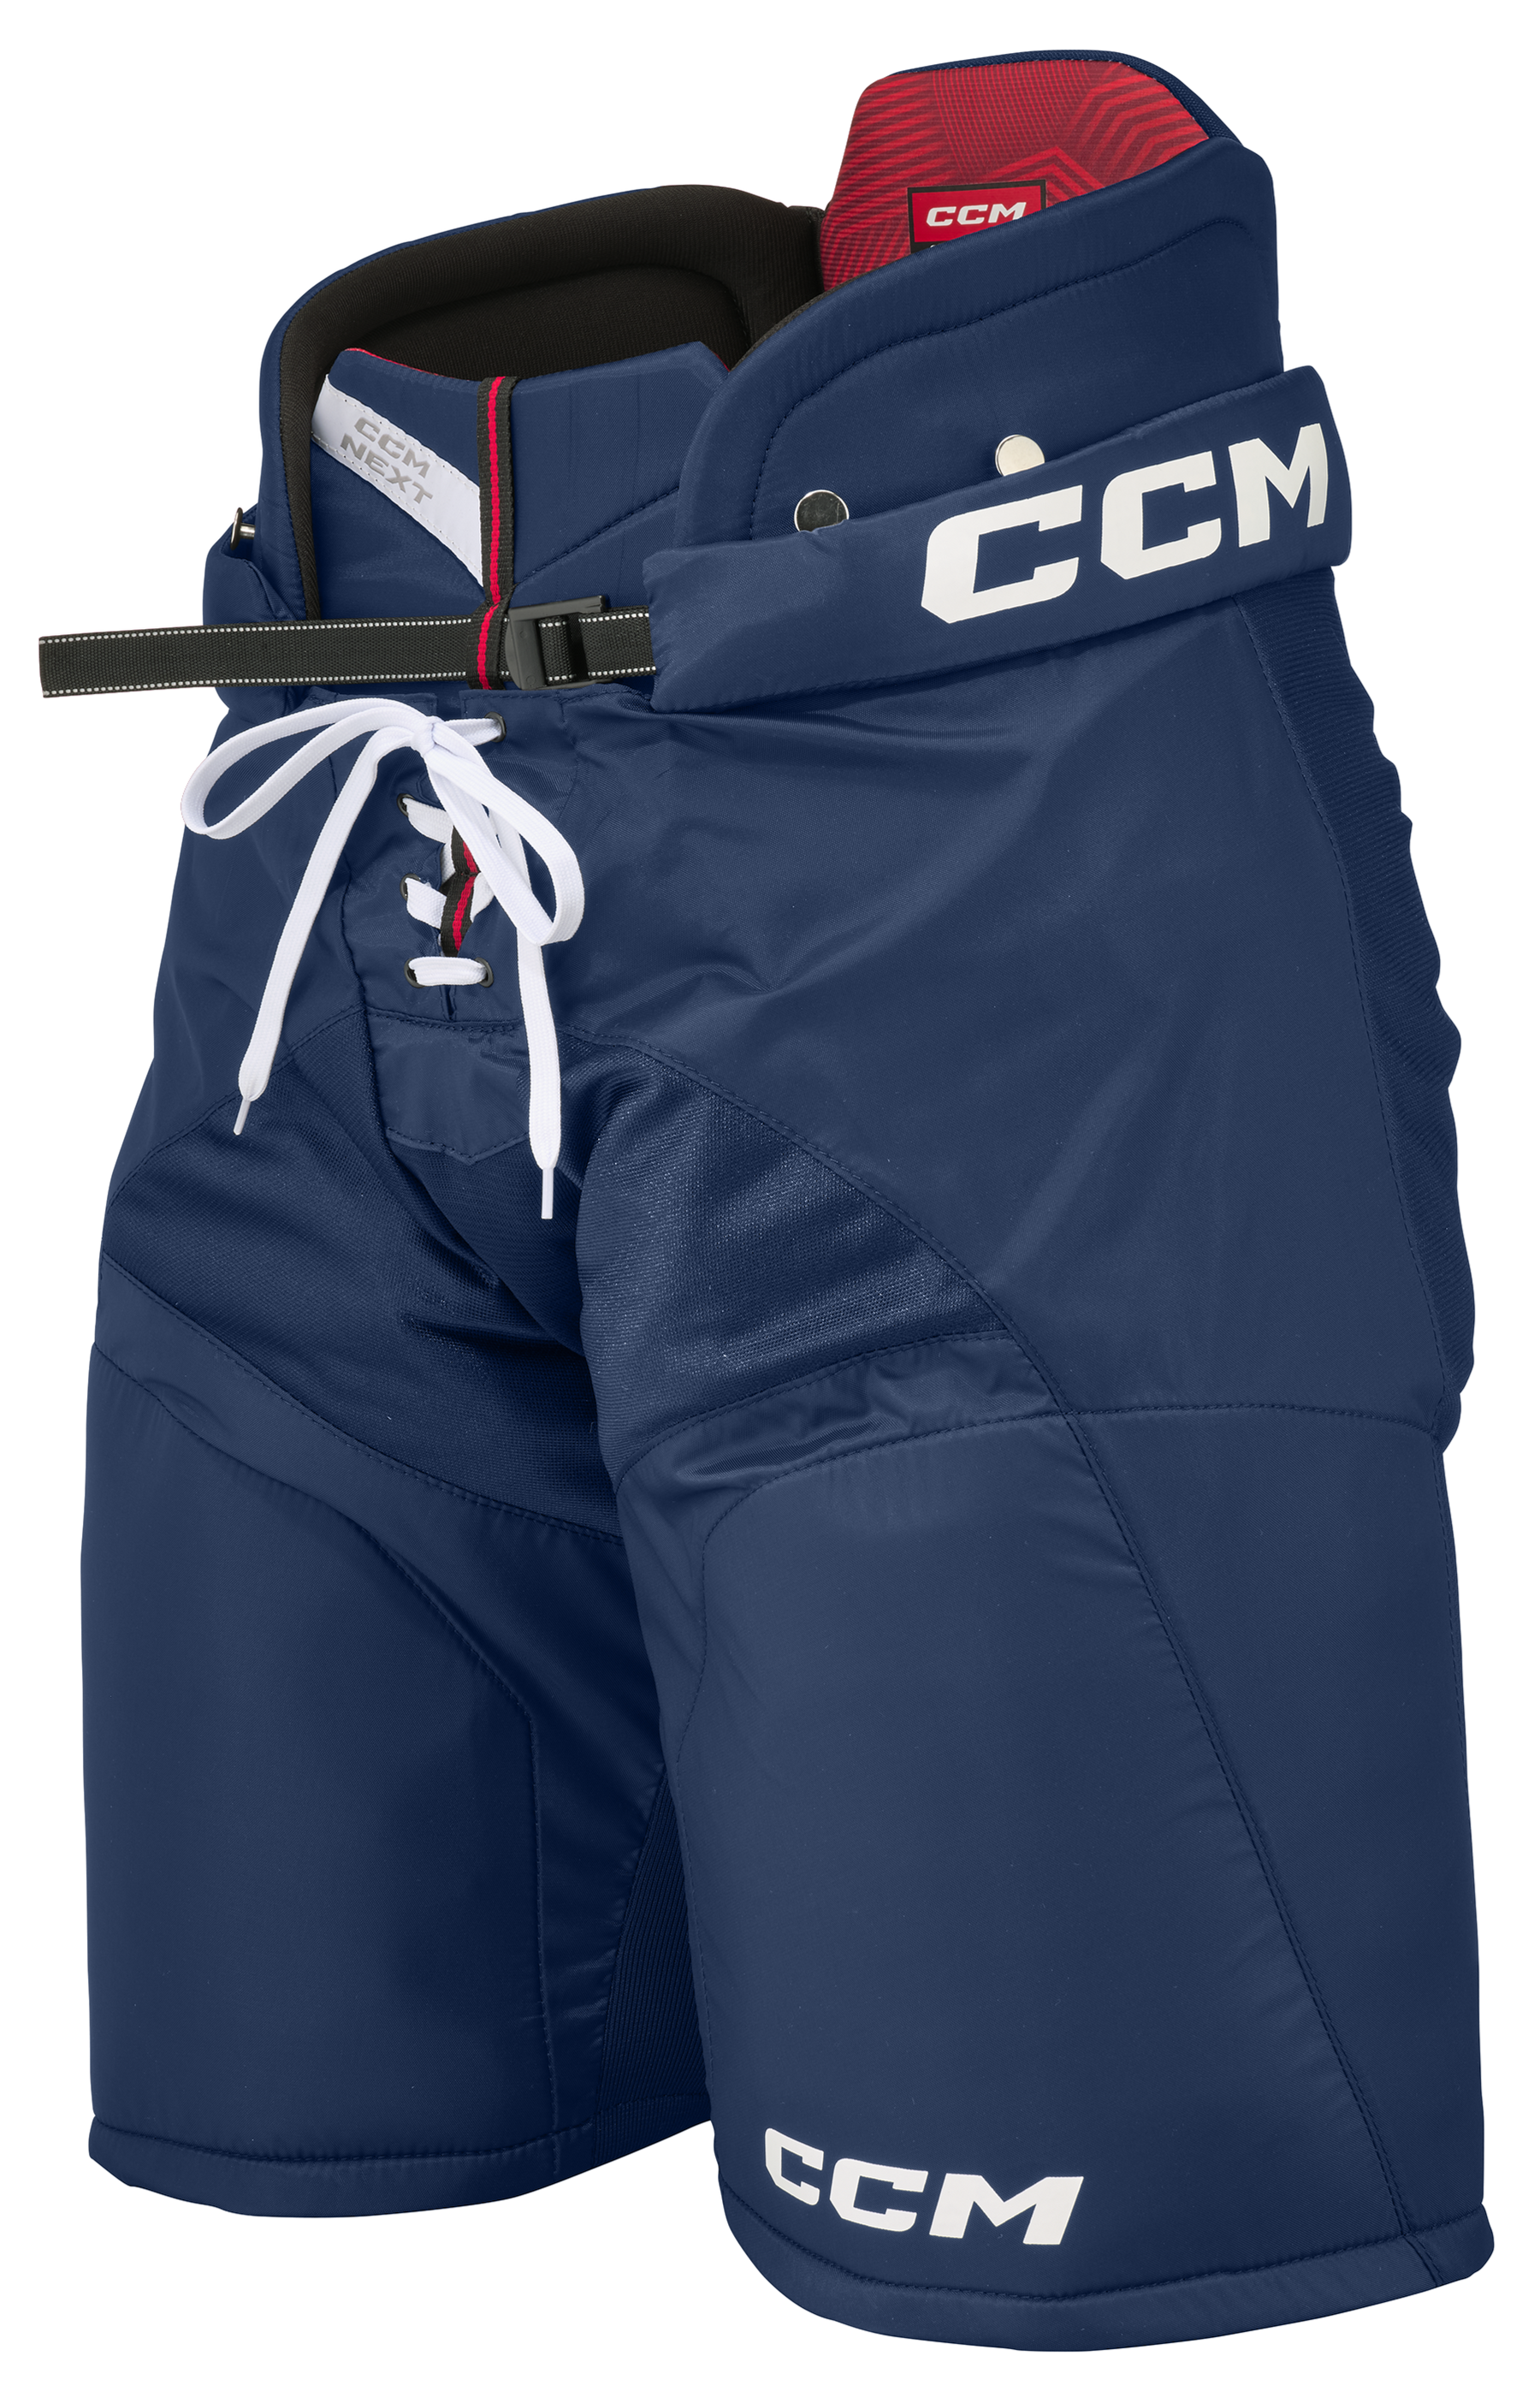 CCM Jetspeed FT390 Hockey Pants - Sr. - The Sports Exchange